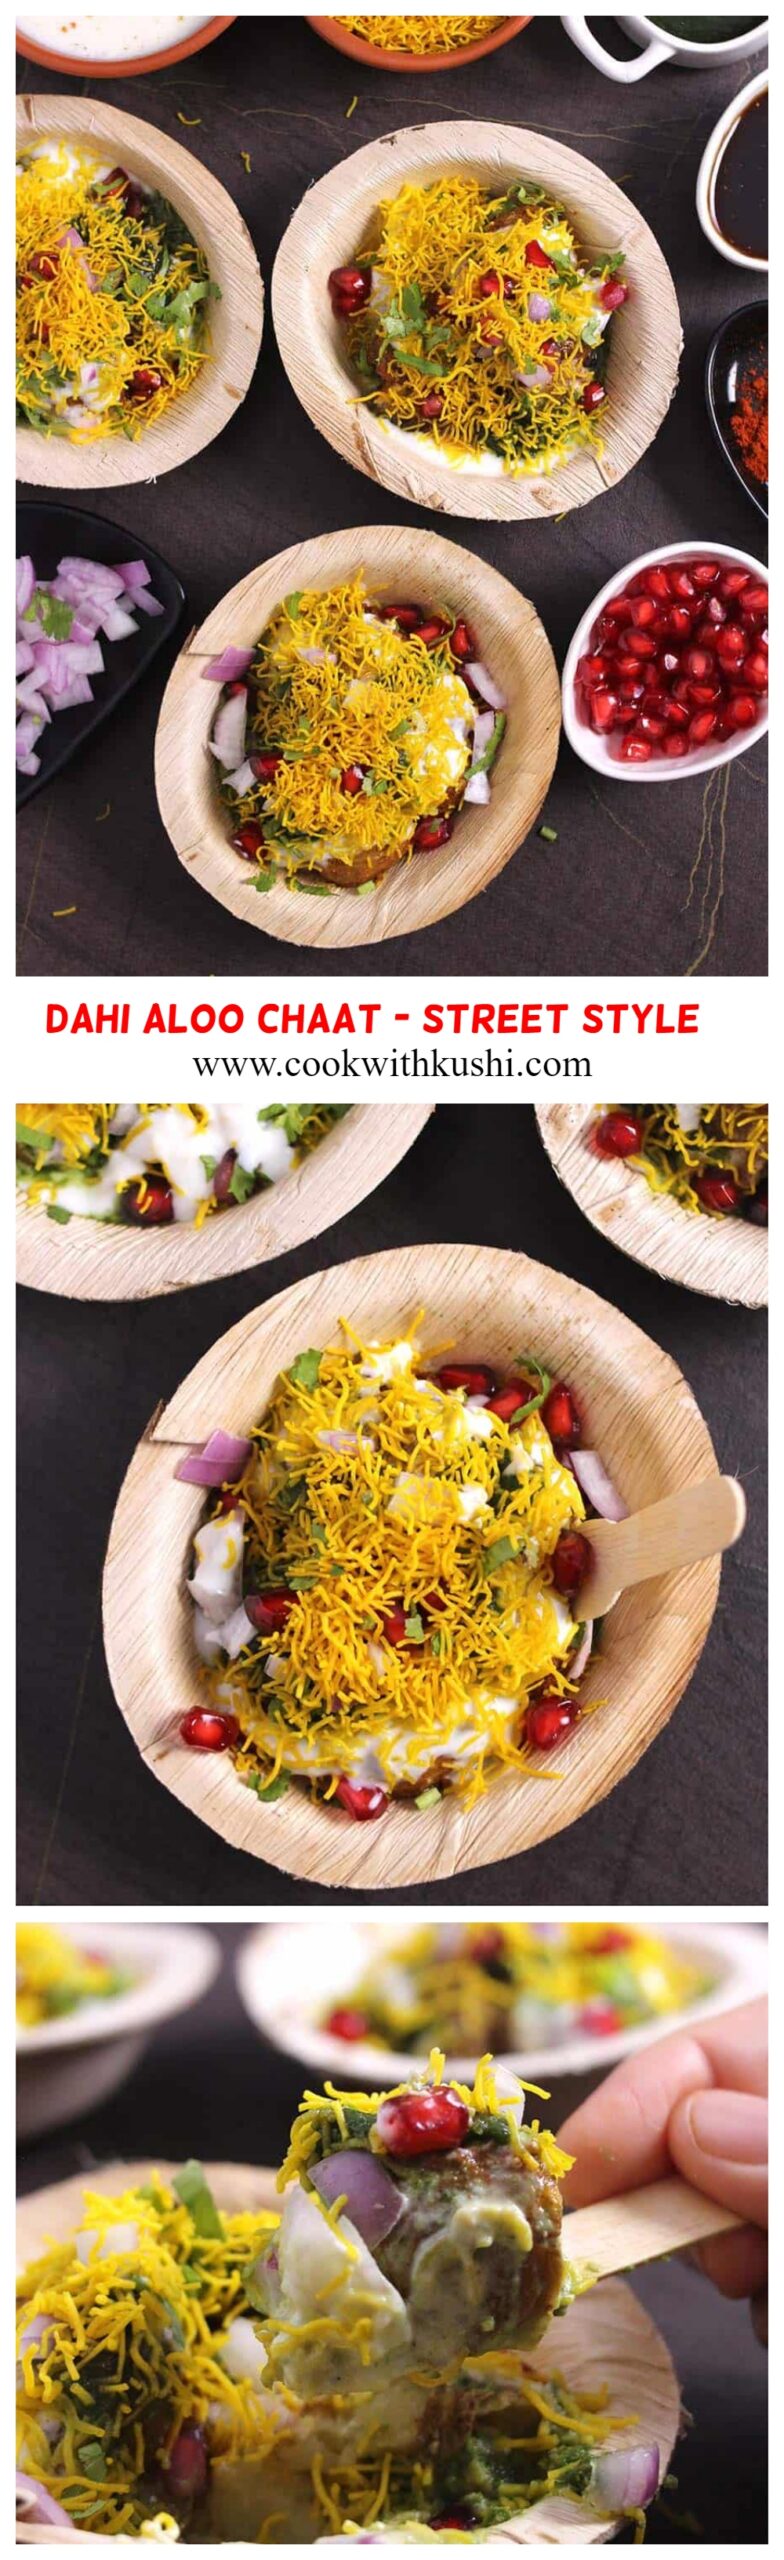 Popular India street style dahi aloo chaat #indiansnacks #chaat